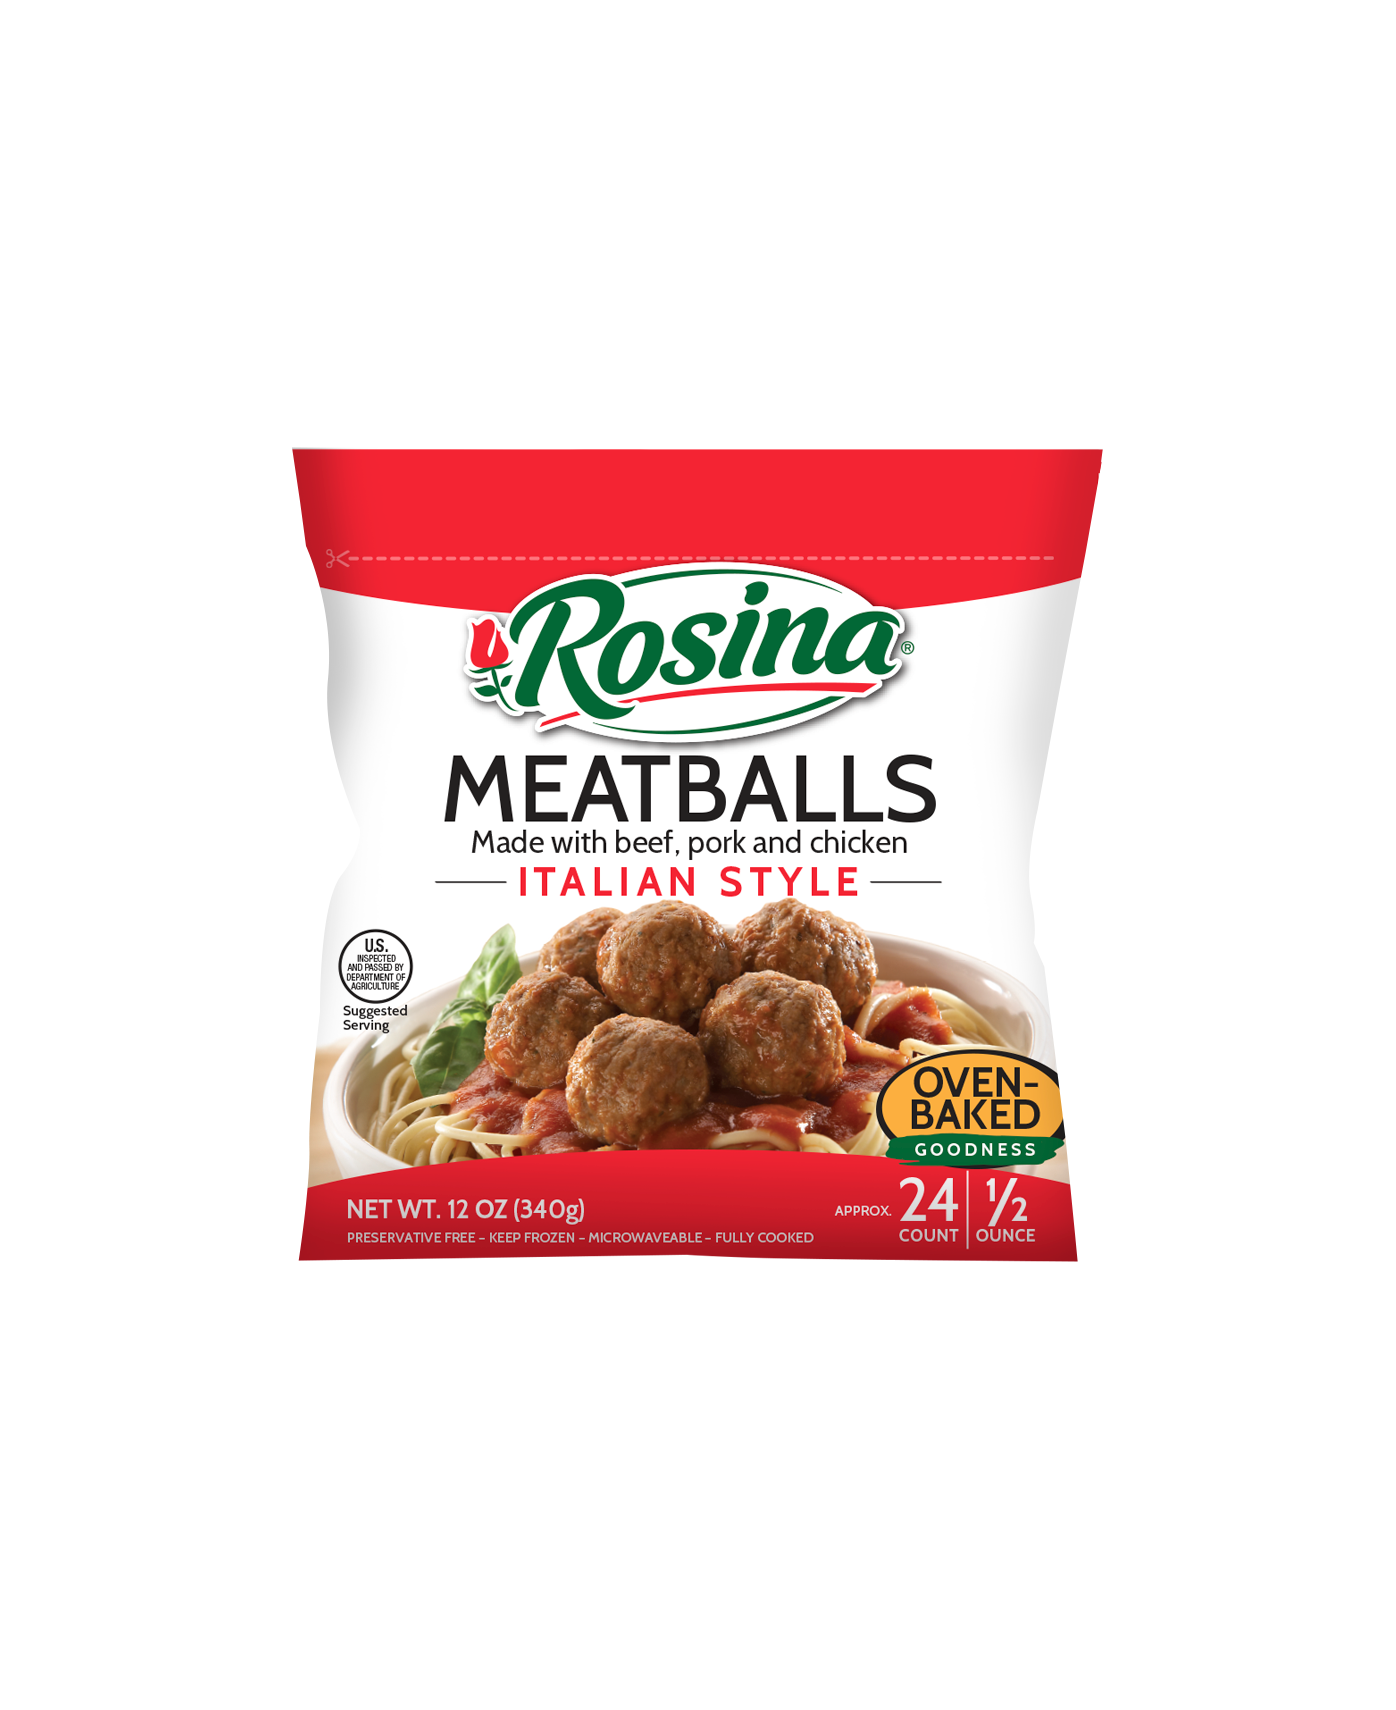 Image of Italian Style Meatballs